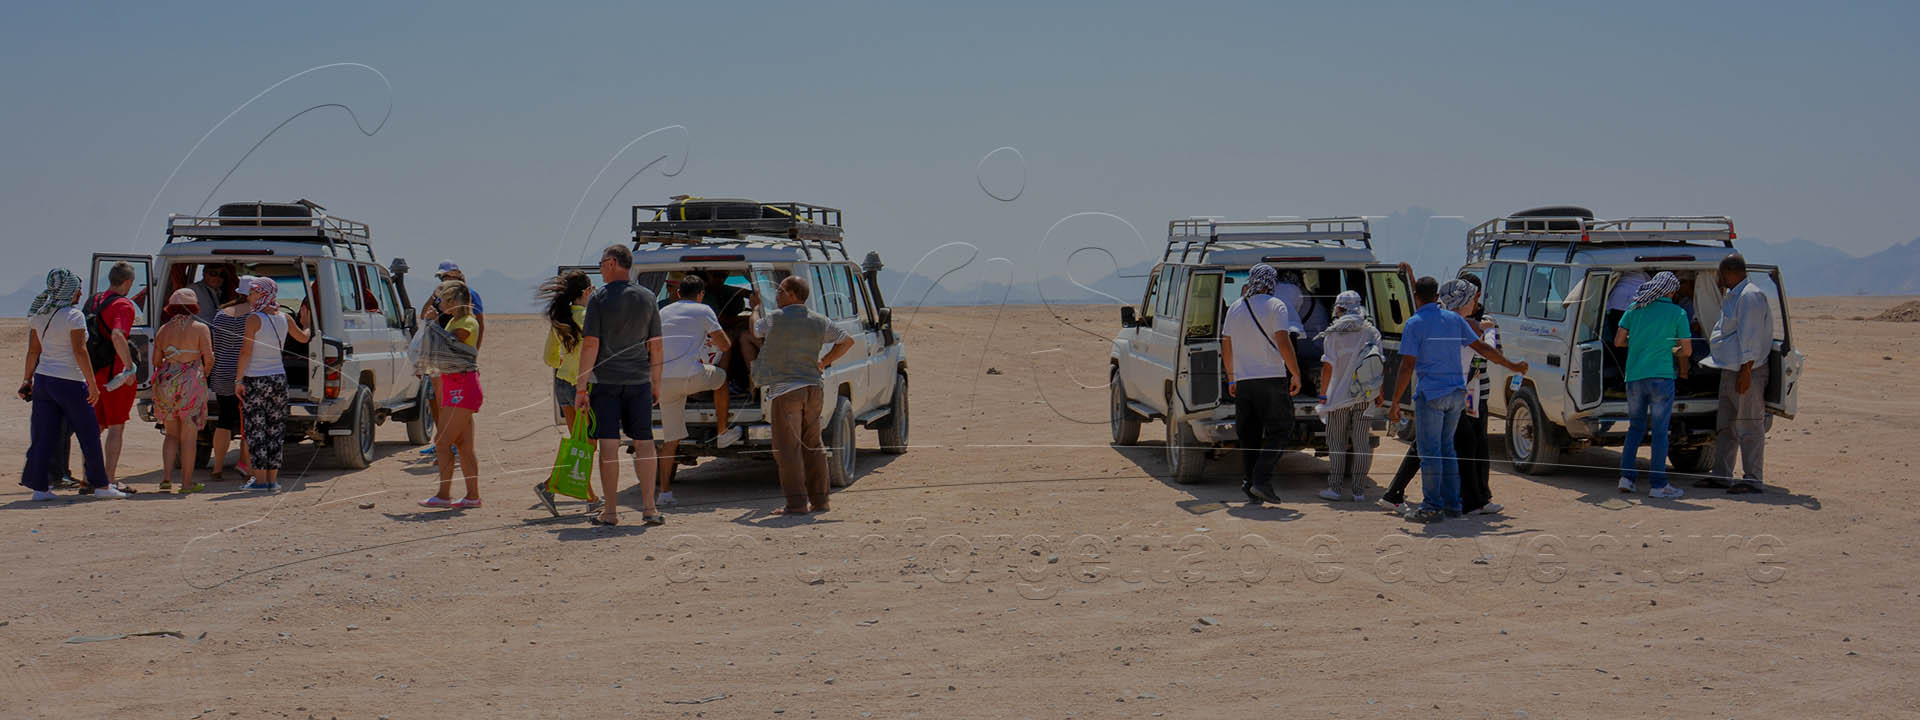 Sahl Hasheesh Safari al atardecer por el desierto